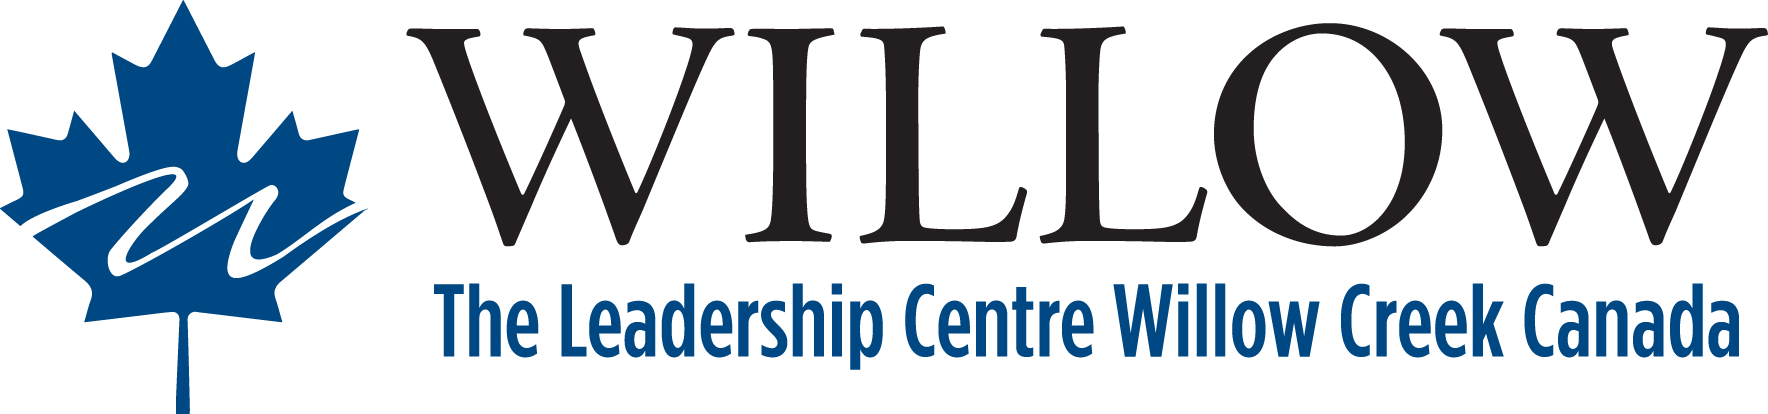 The Leadership Centre Willow Creek Canada Faith Alliance 150 Member Profile Faith In Canada 150